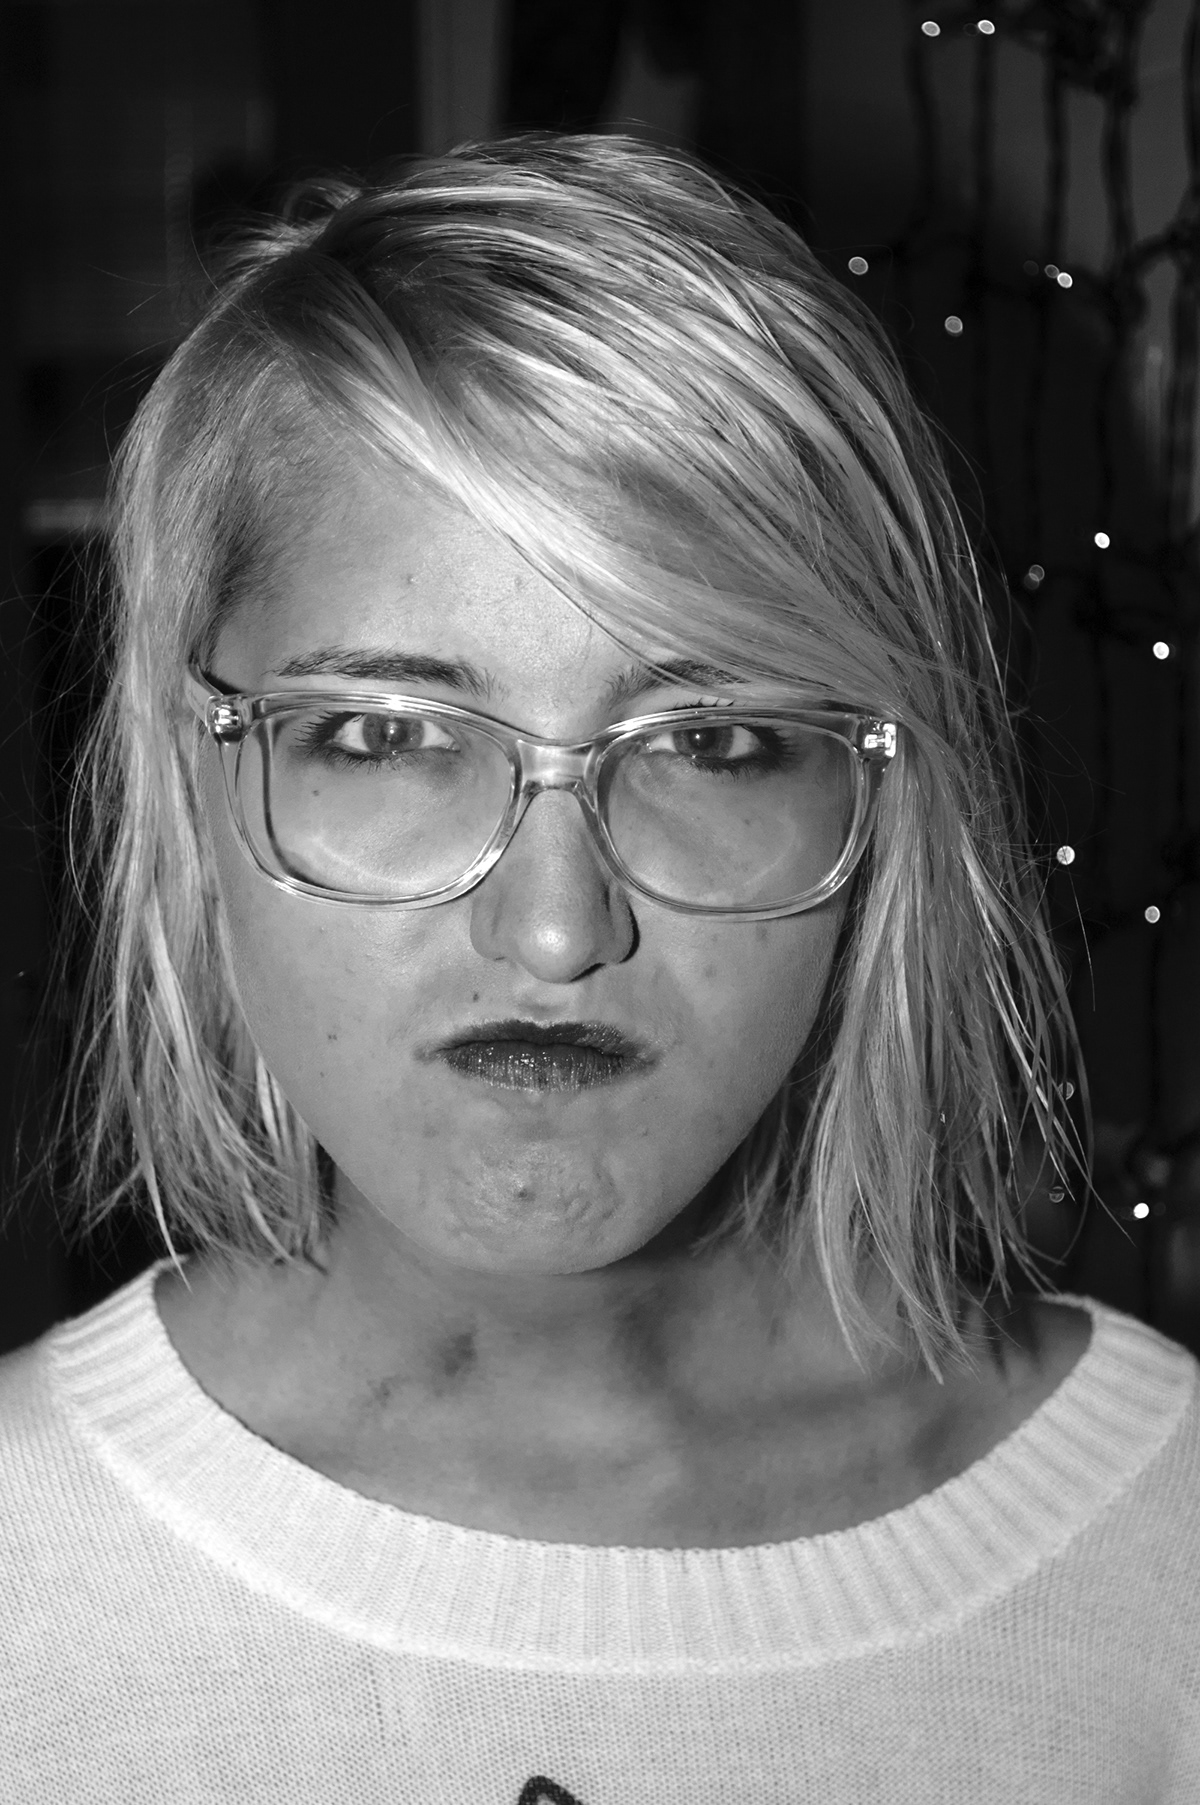 black and white medium format War faces intense scream photographer backdrop screenprint photo printmaking